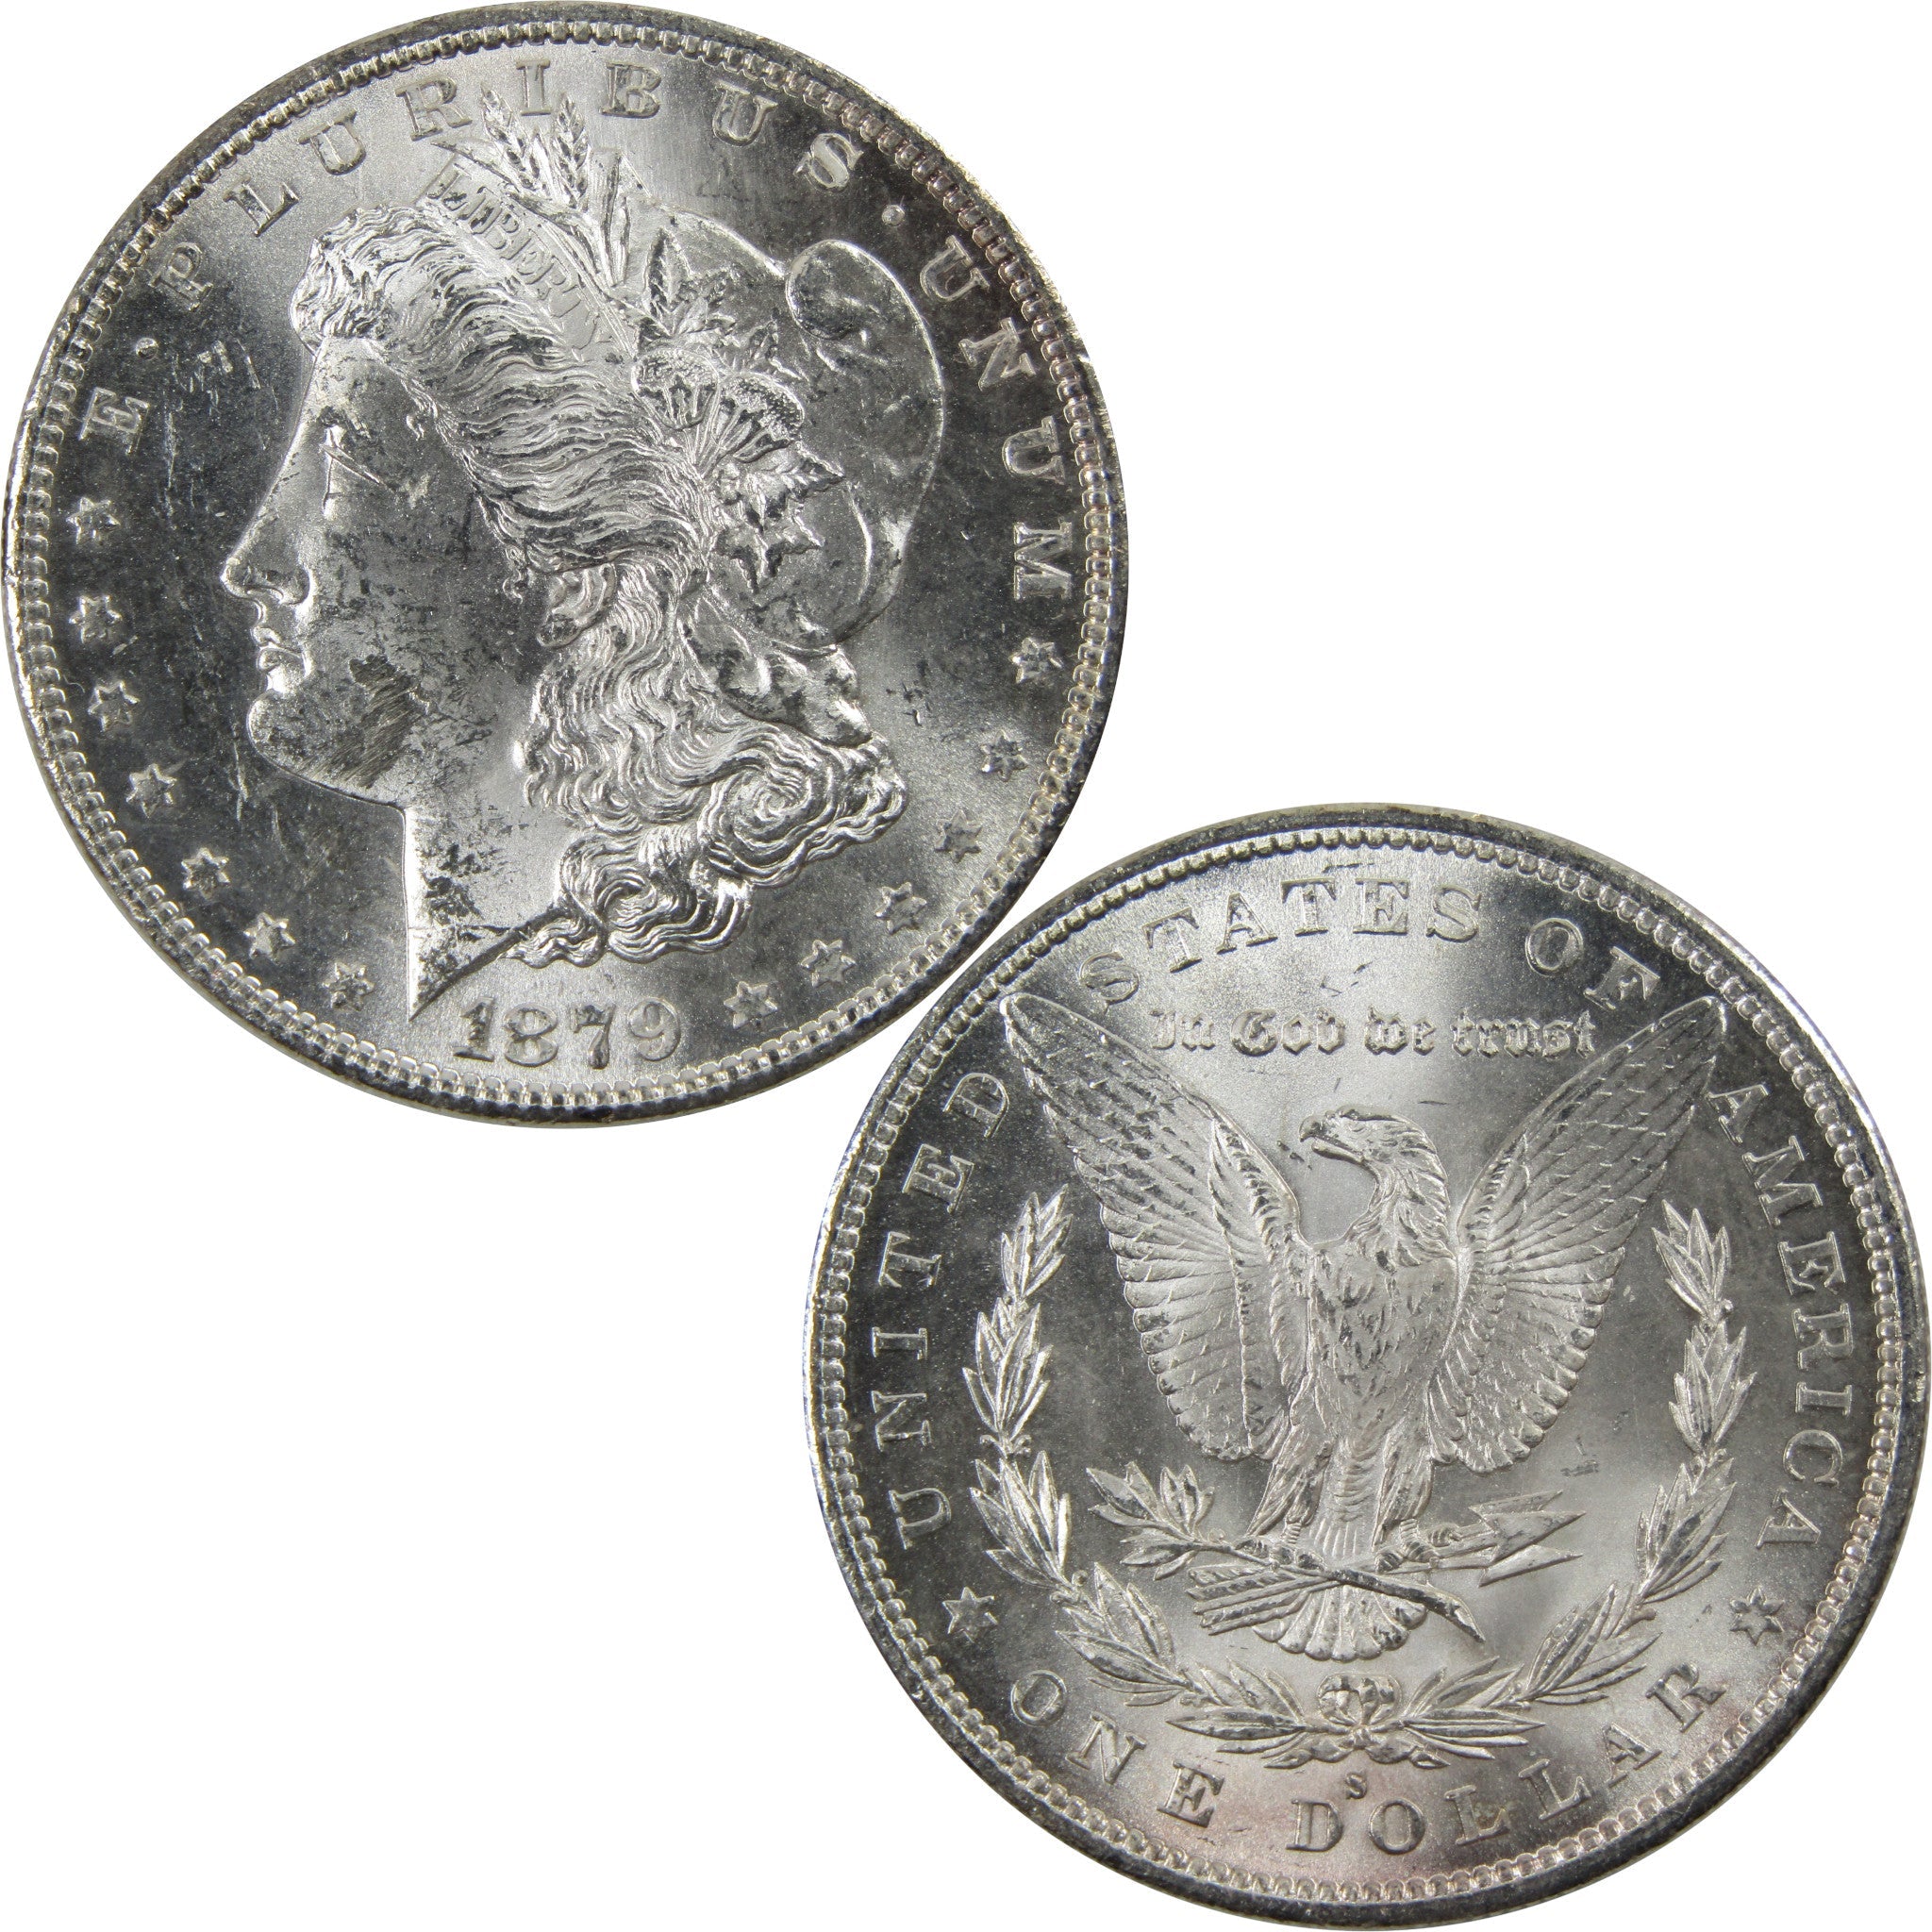 1879 S Morgan Dollar BU Uncirculated 90% Silver $1 SKU:I5444 - Morgan coin - Morgan silver dollar - Morgan silver dollar for sale - Profile Coins &amp; Collectibles